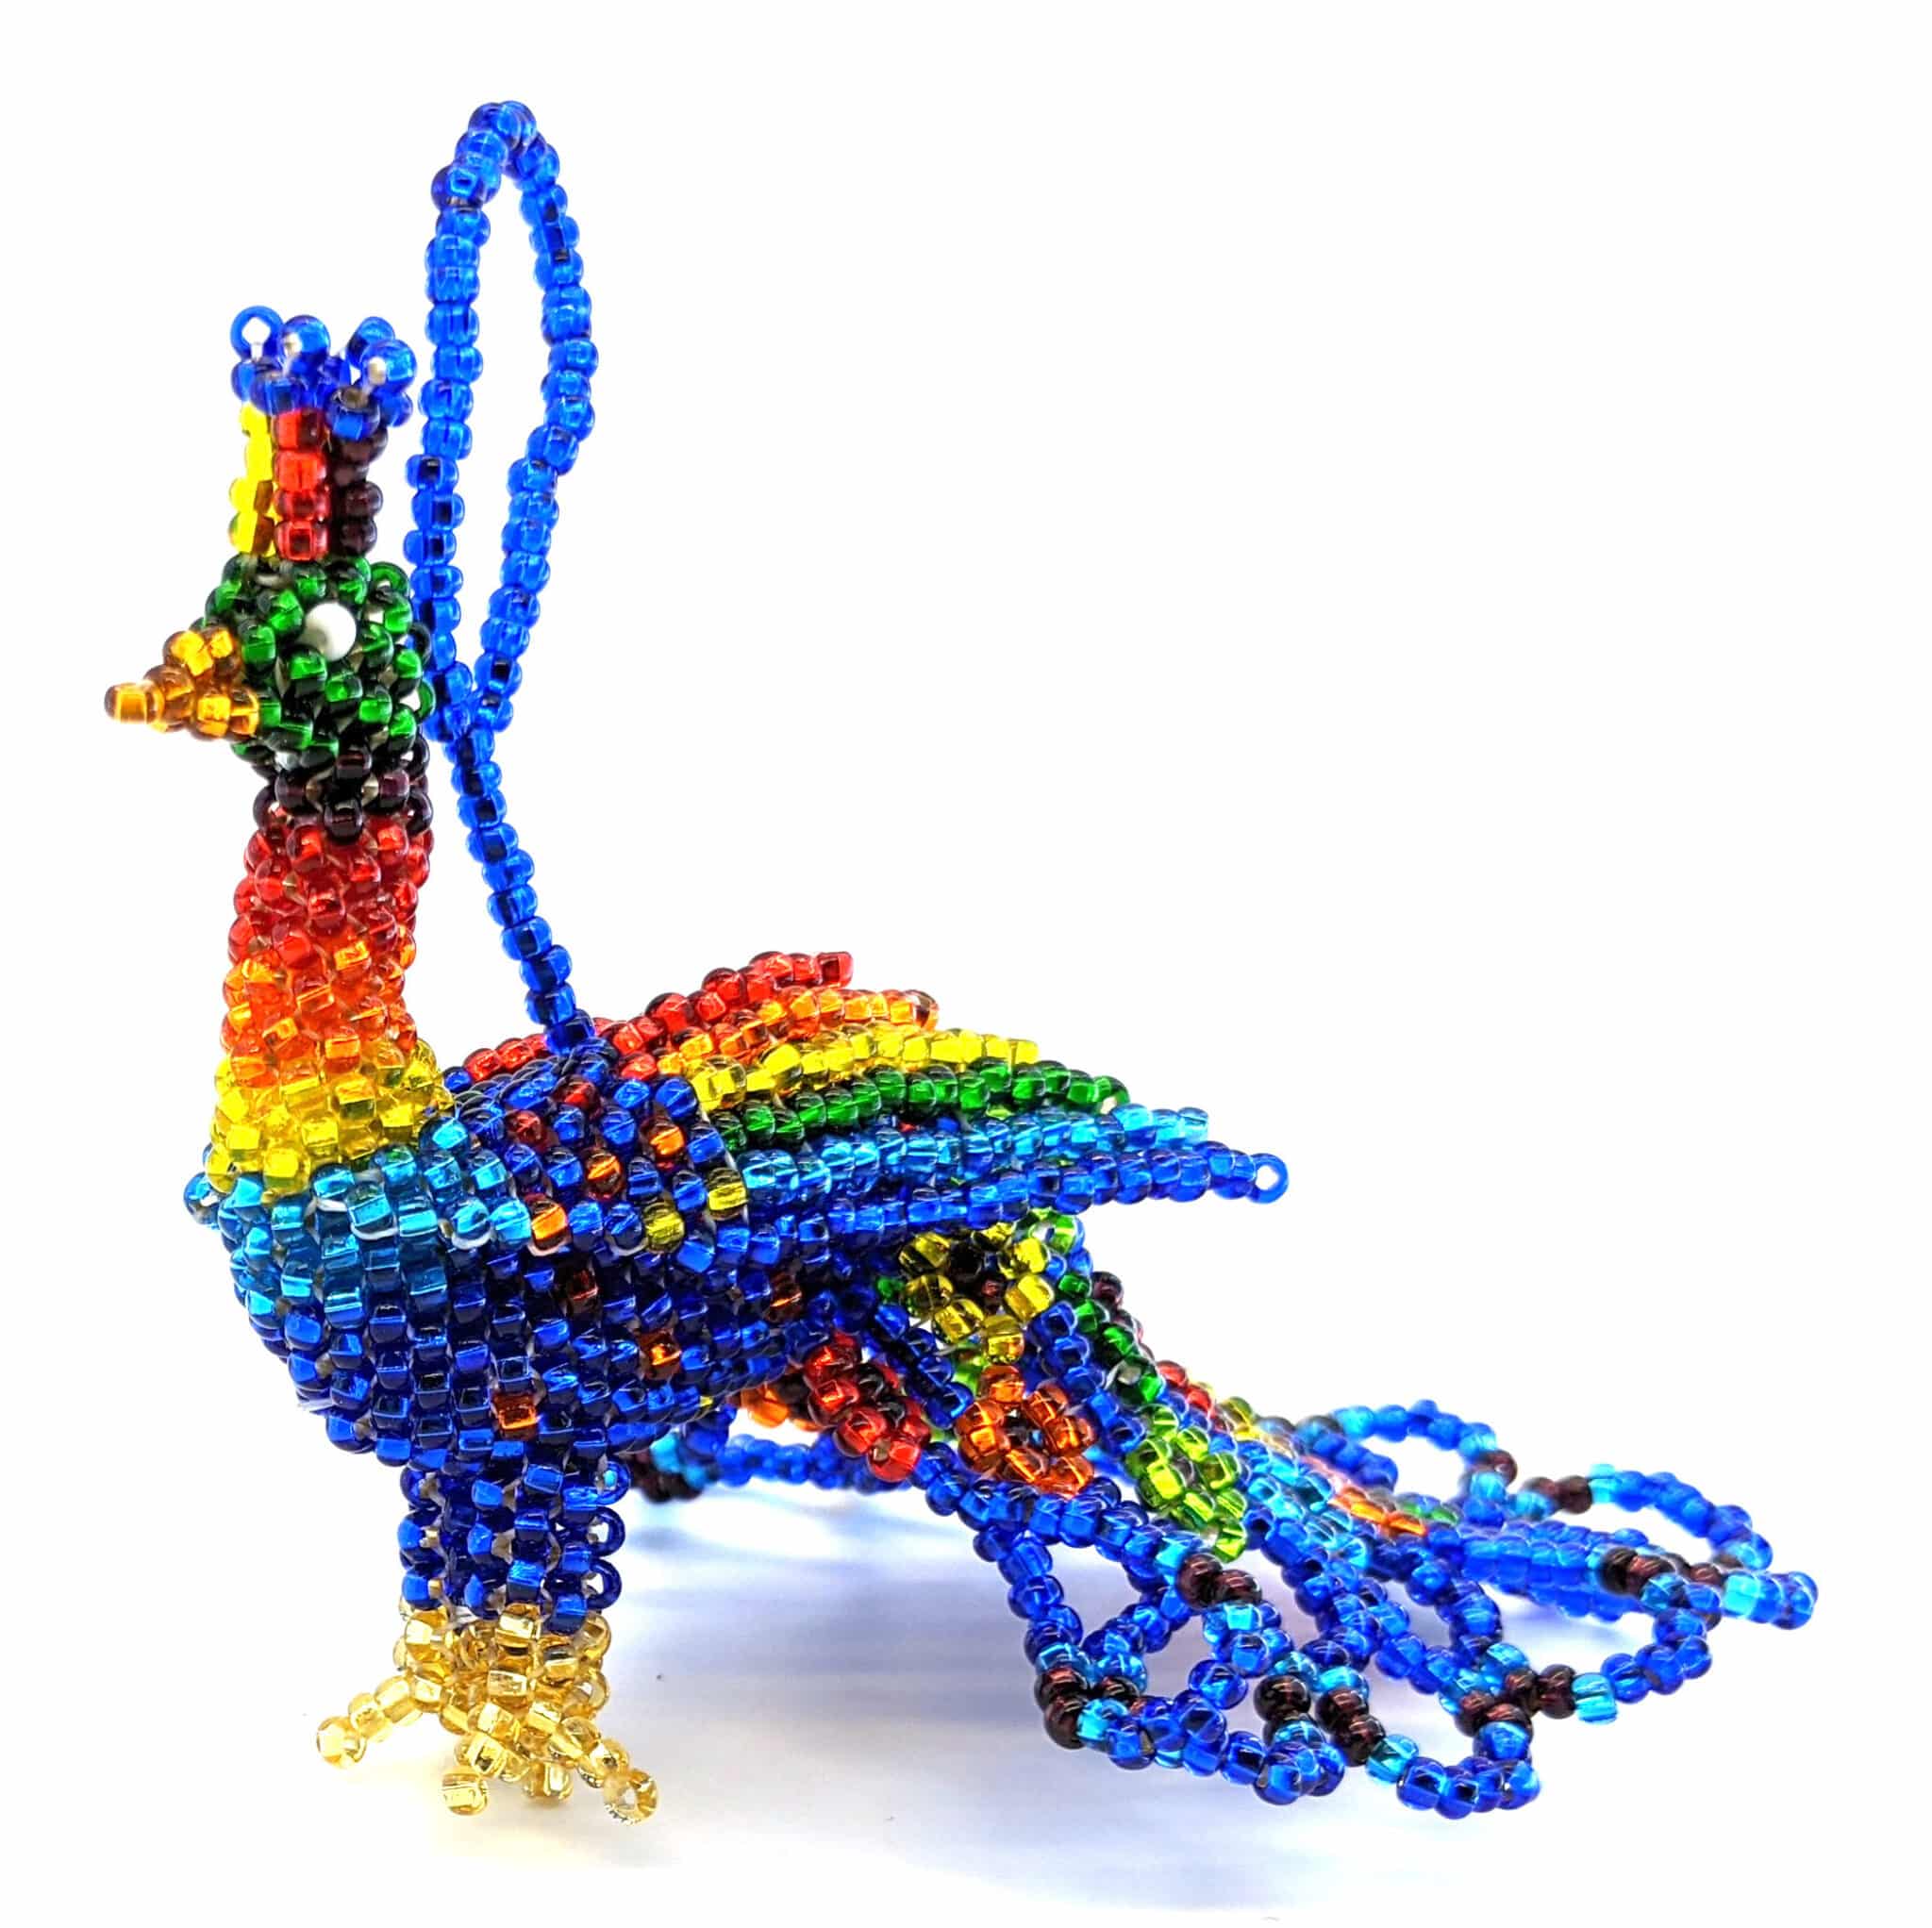 Peacock Beaded Ornament - Rainbow with Blue